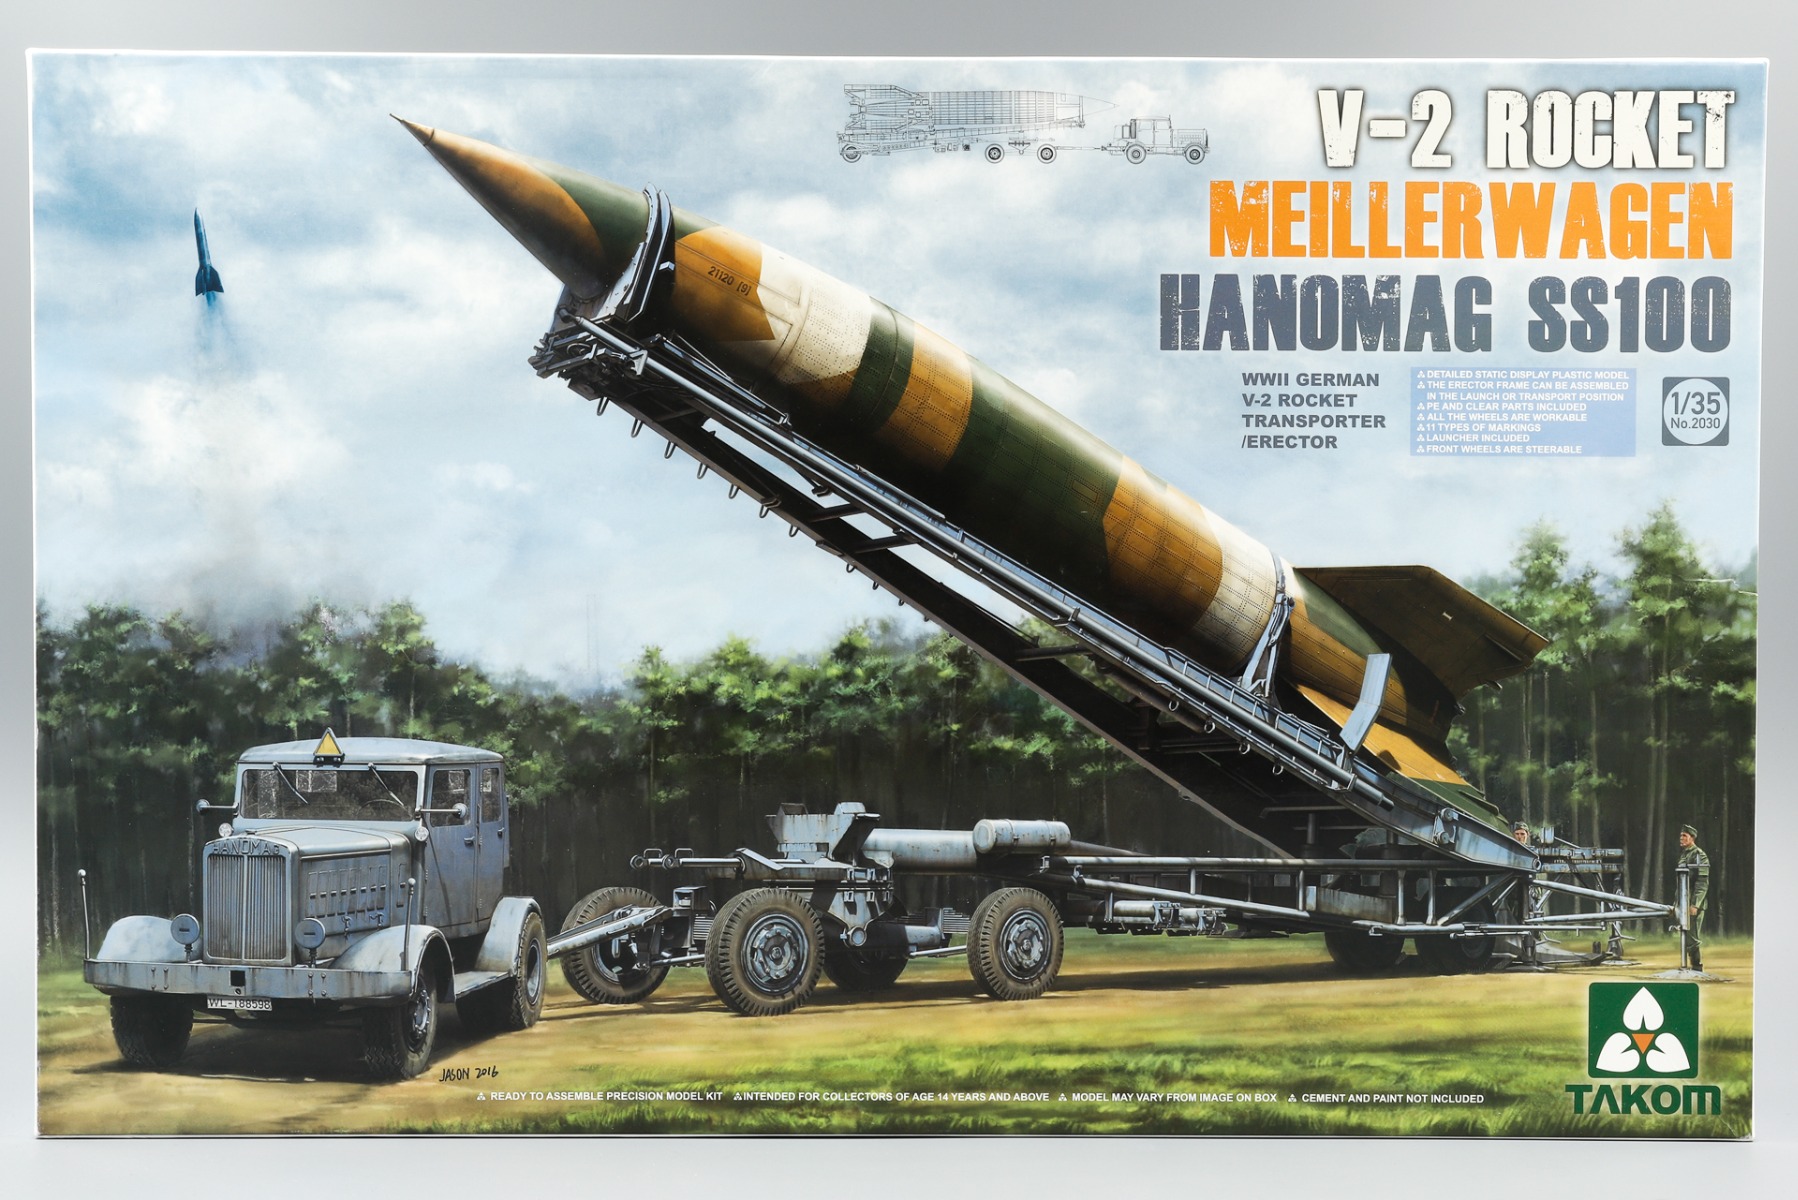 Takom TAKOM2030 V-2 Rocket Meillerwagen Hanomag SS100 WWII German V-2 Rocket Transporter/Erector